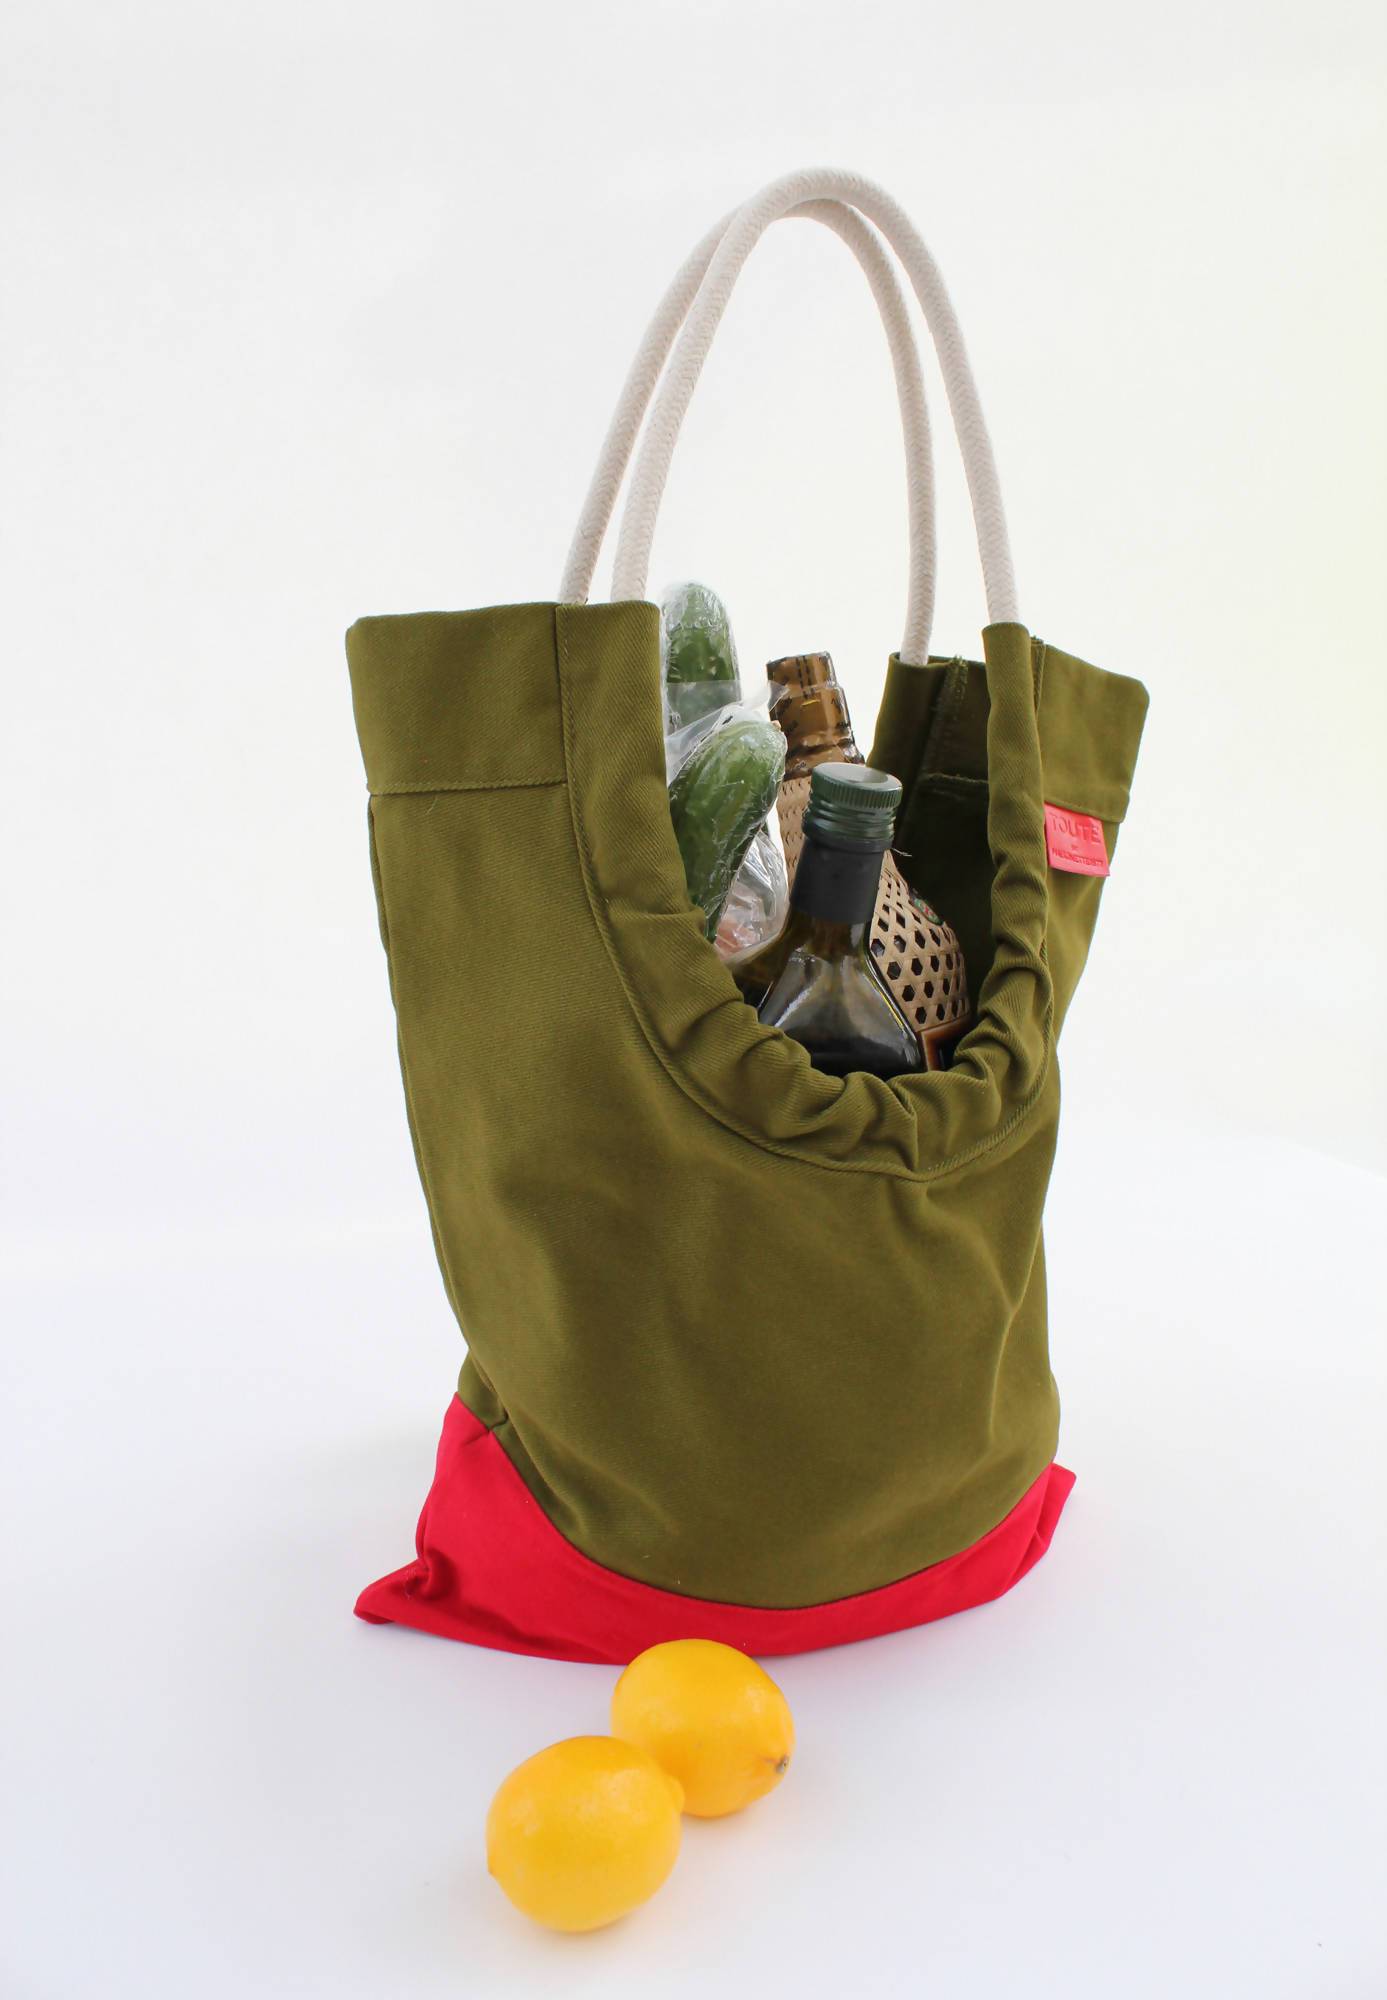 The Original TOUTE tote bag - Tote Bags - Toute by Maisonette1977 - Naiise